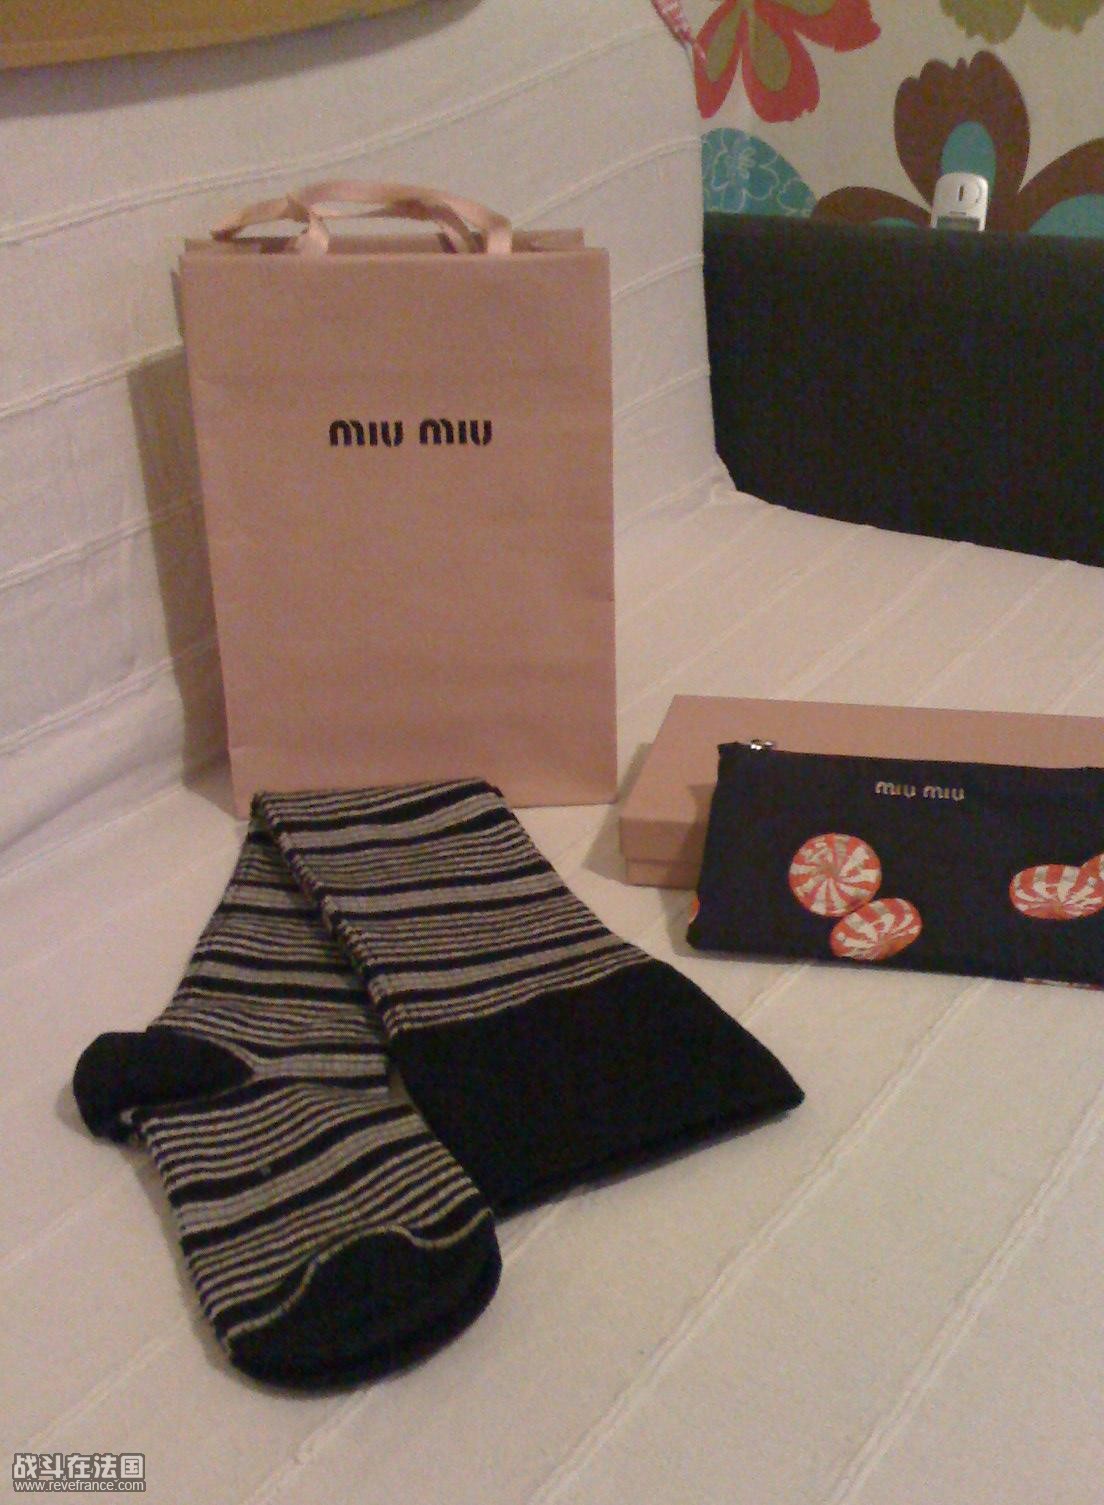 MUIMUI的袜子和小钱袋 钱袋是6号提前5折的  袜子市号4折的所得 嘿嘿